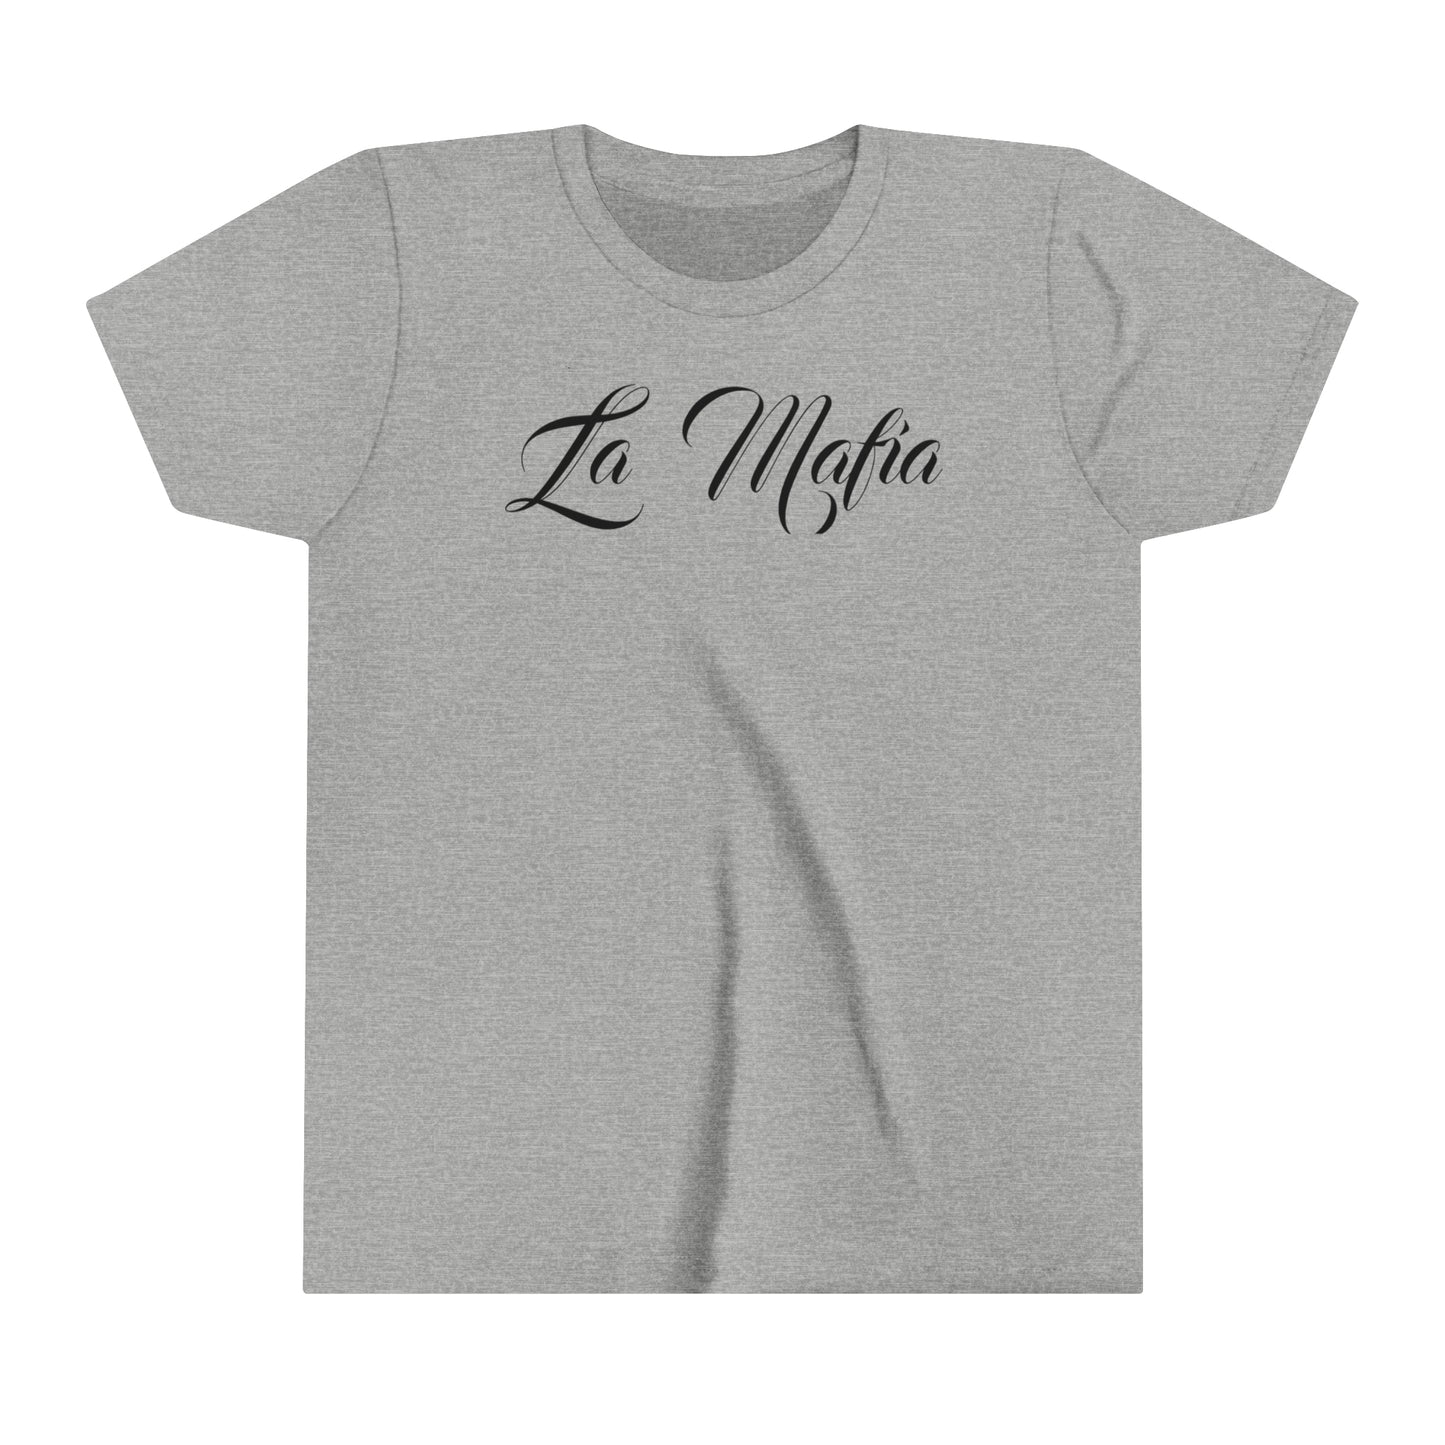 La Mafia | Youth T-shirt